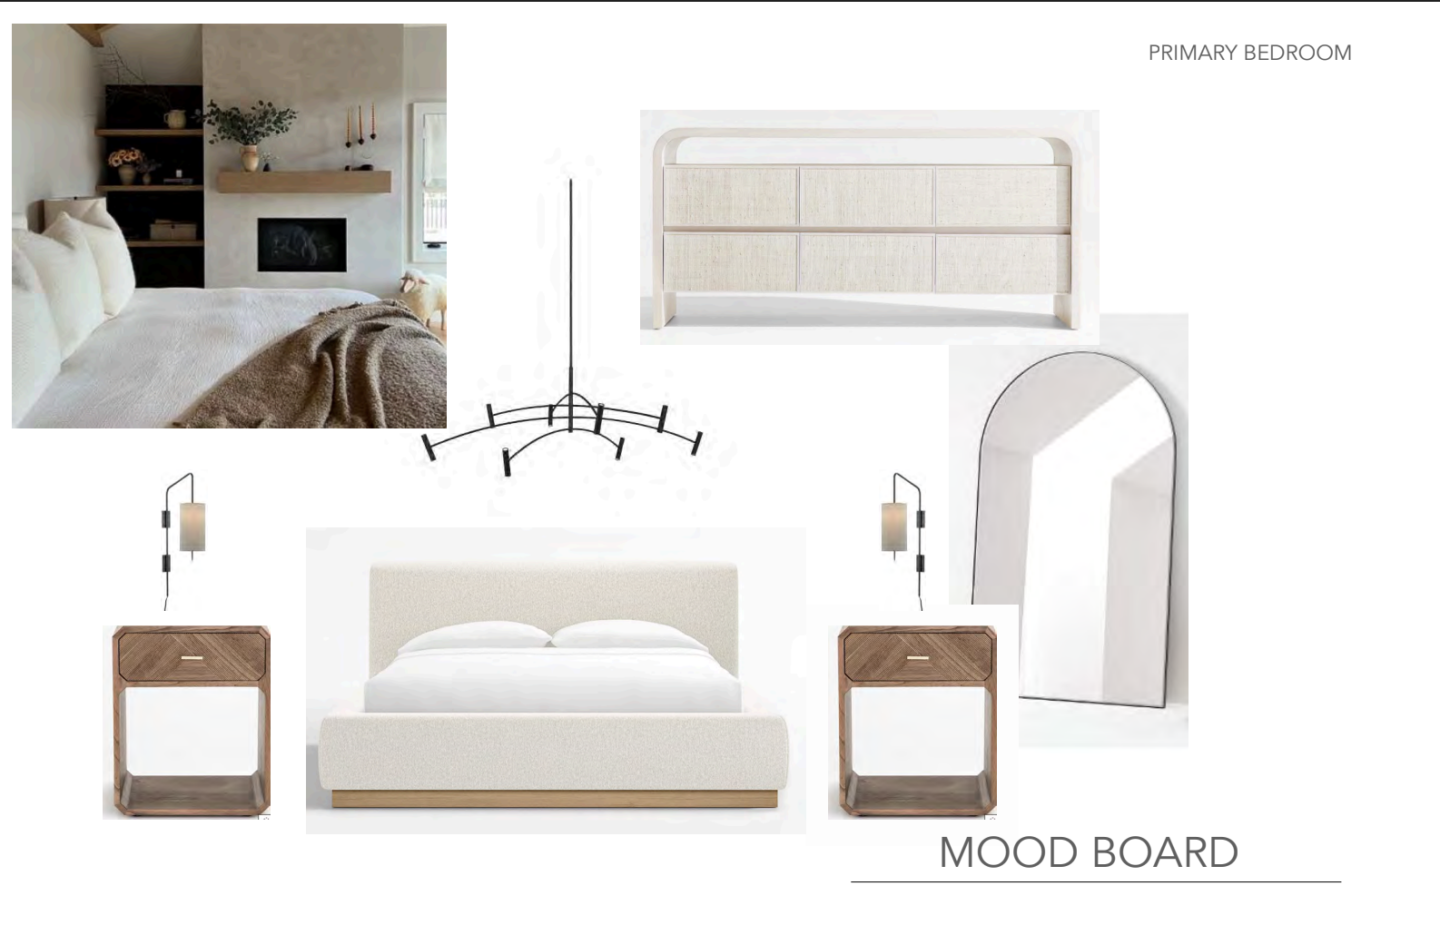 Phase I : Main Level Remodel | Mood Board Inspiration - Primary Bedroom